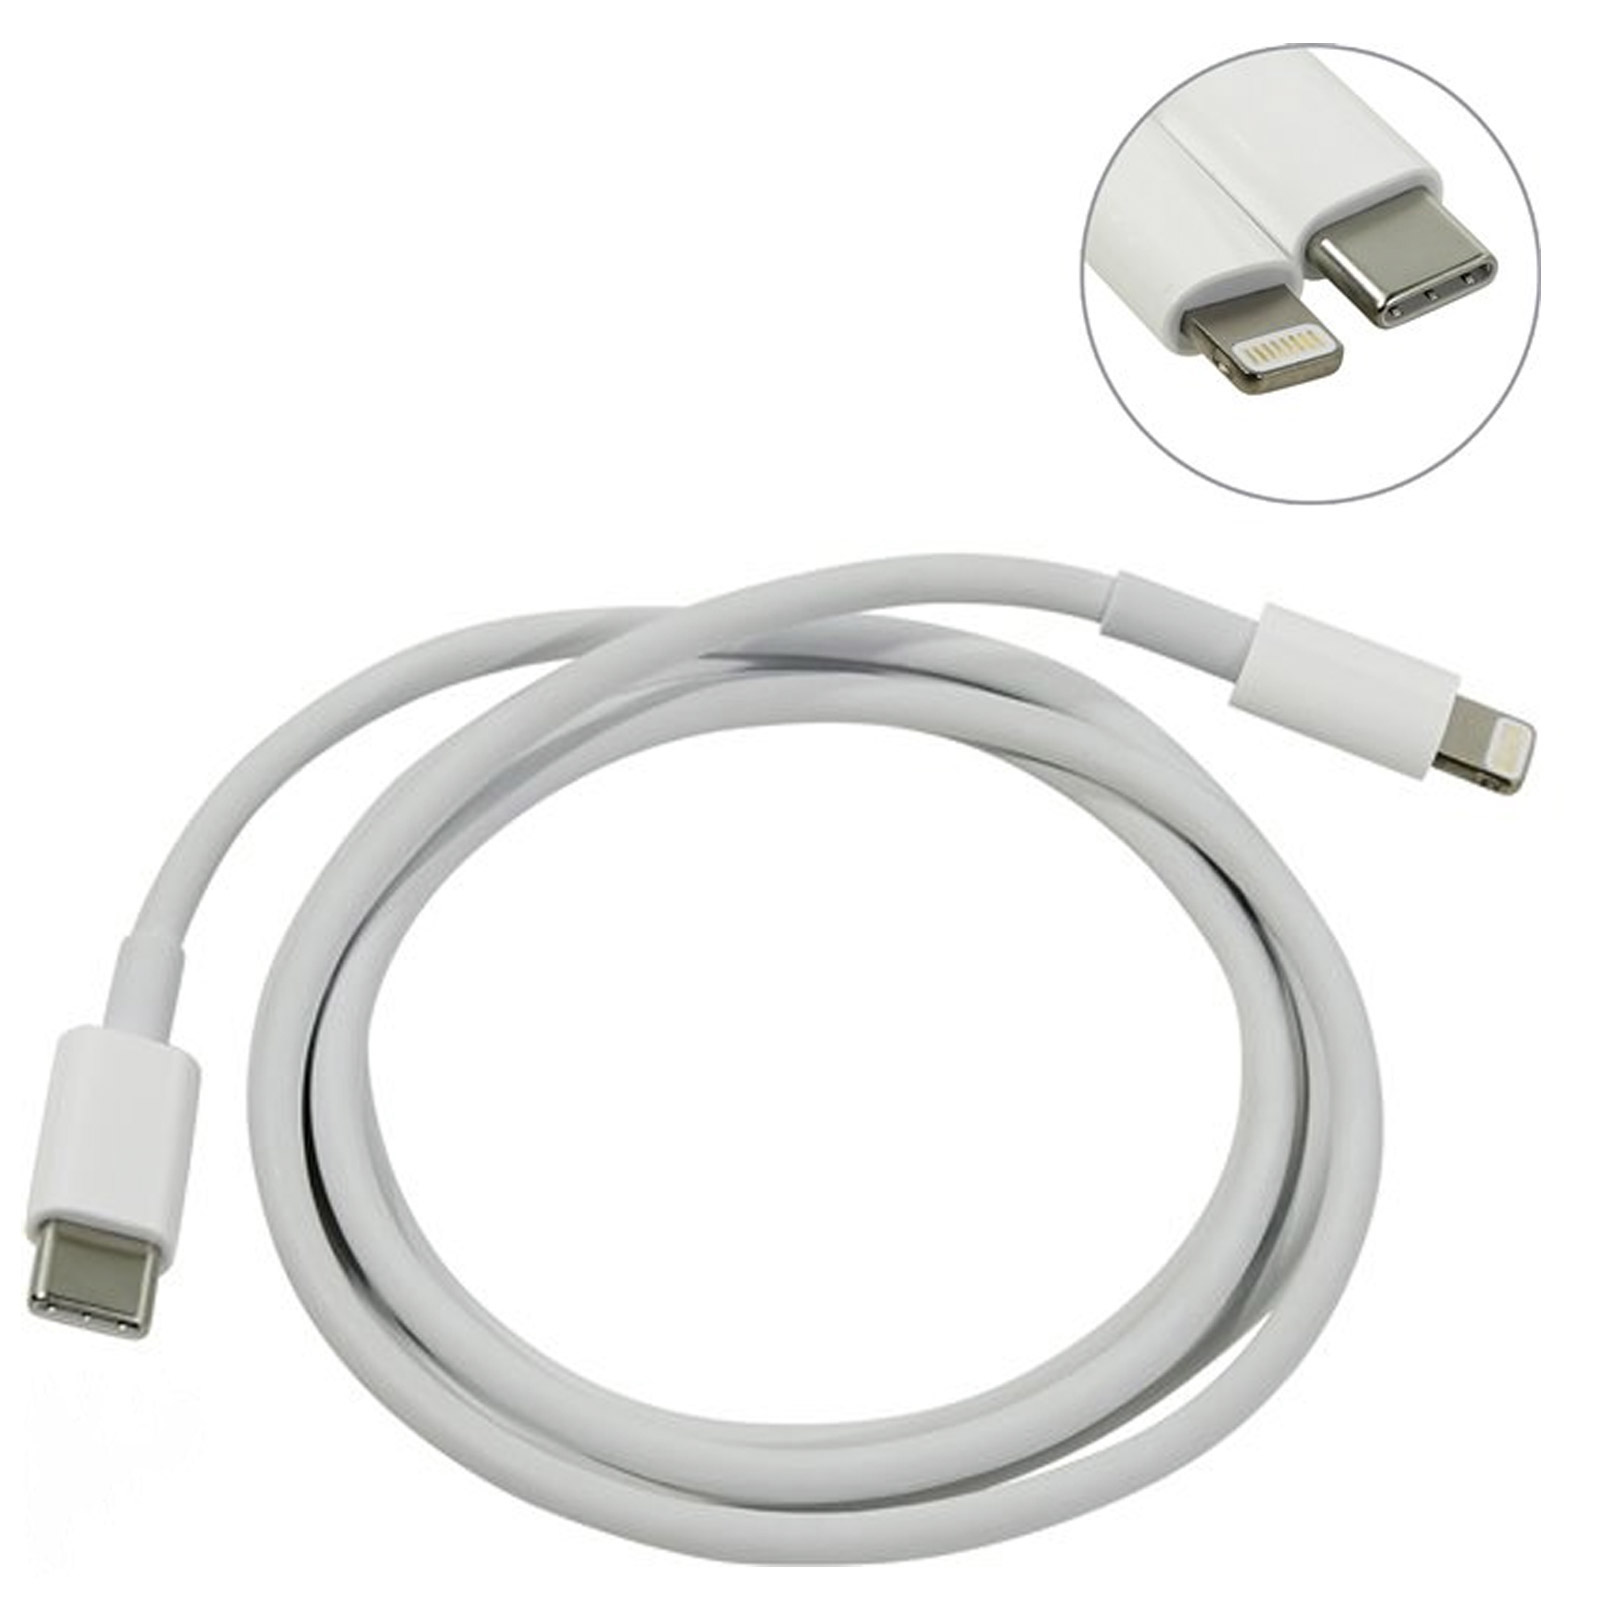 Кабель Type-C aka USB-C на APPLE Lightning 8-pin, длина 1 метр, цвет белый